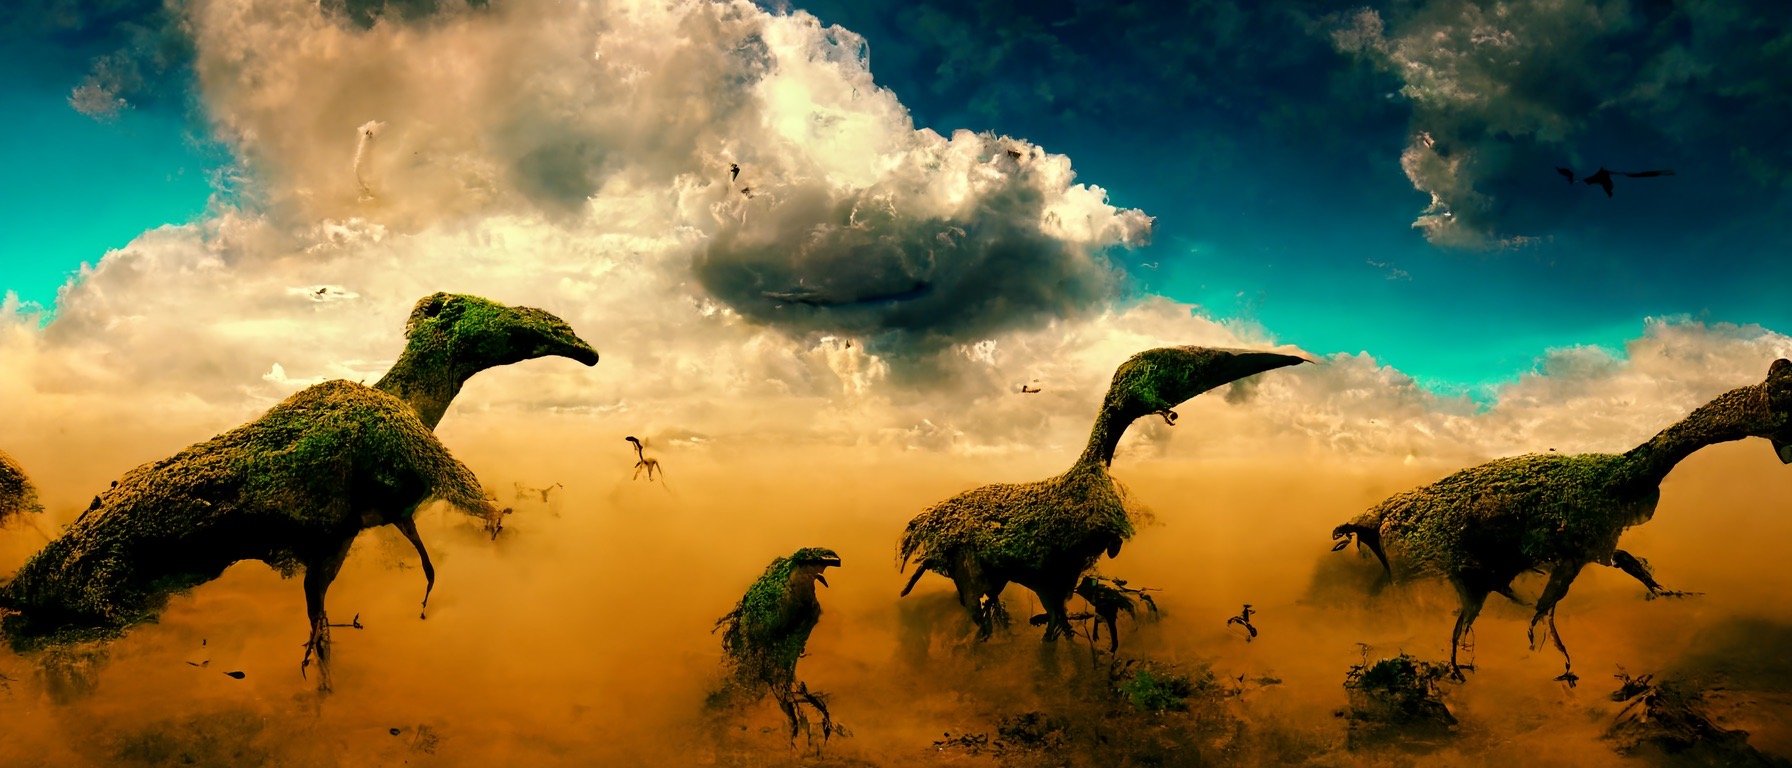 4ece2587-f819-46ba-af9e-02b3e227443d_S3RAPH_dinosaur_footprint_in_mud._Flock_of_birds_in_green_prehistoric_jungle._Epic_sky._Cinematic_compositi.JPG